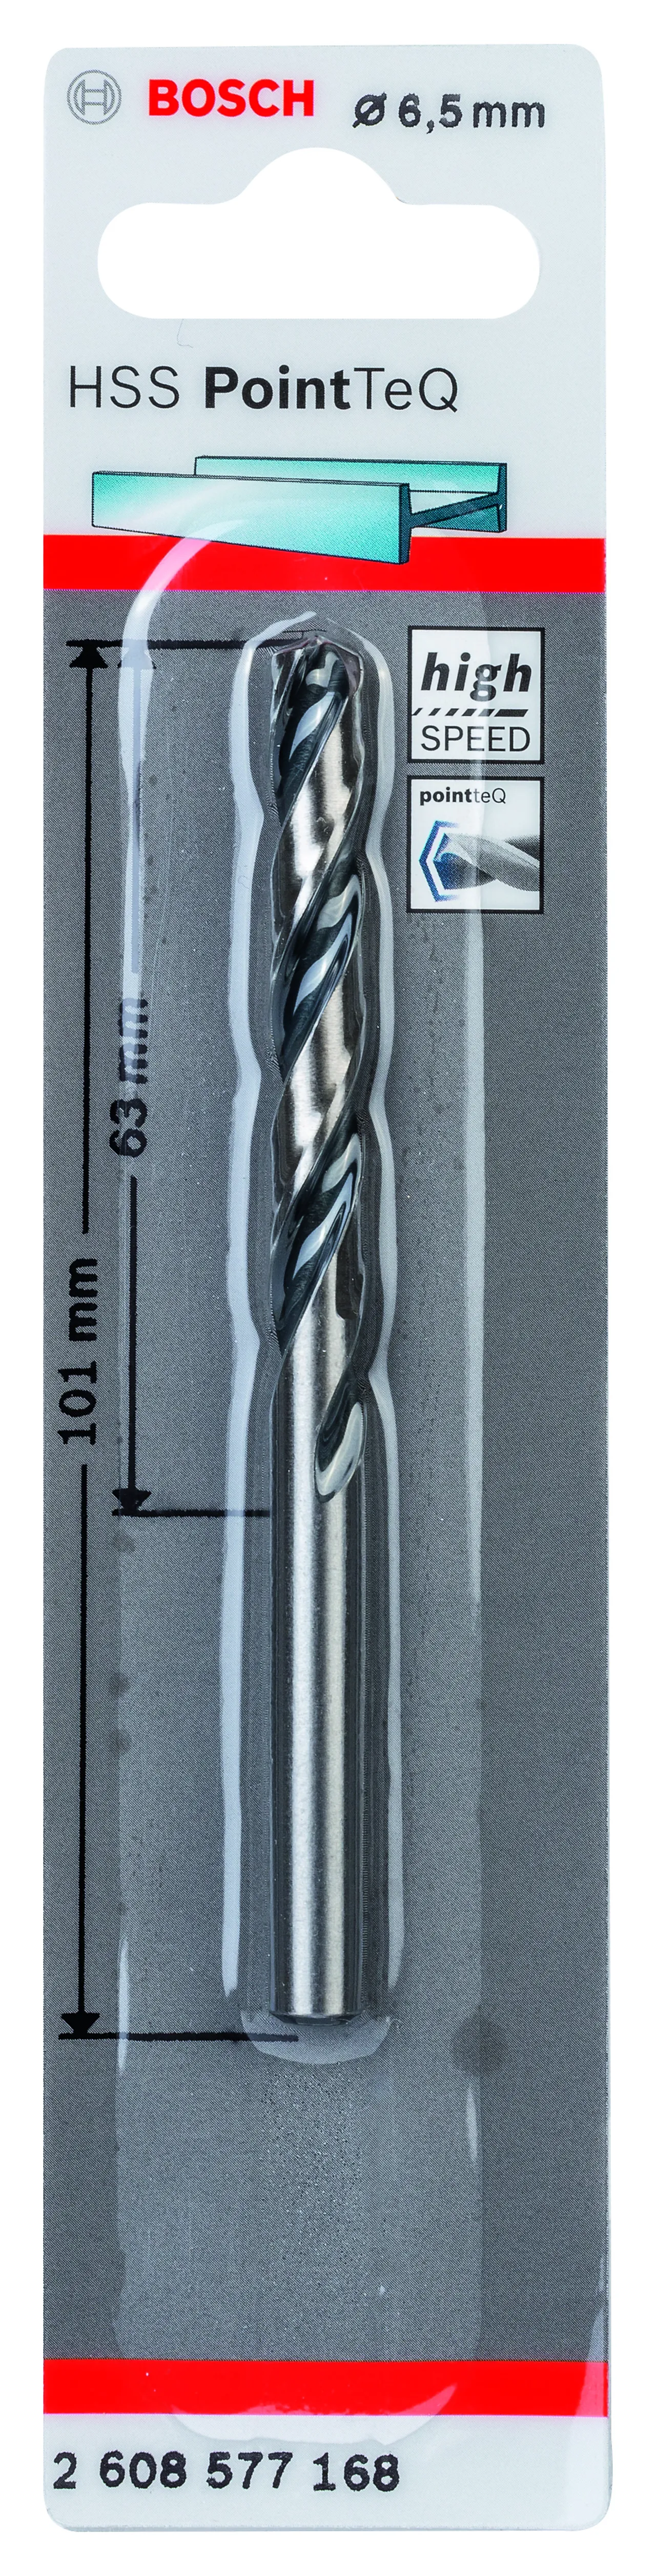 Metallbor pointtec hss-r 6,5mm bosch   n40